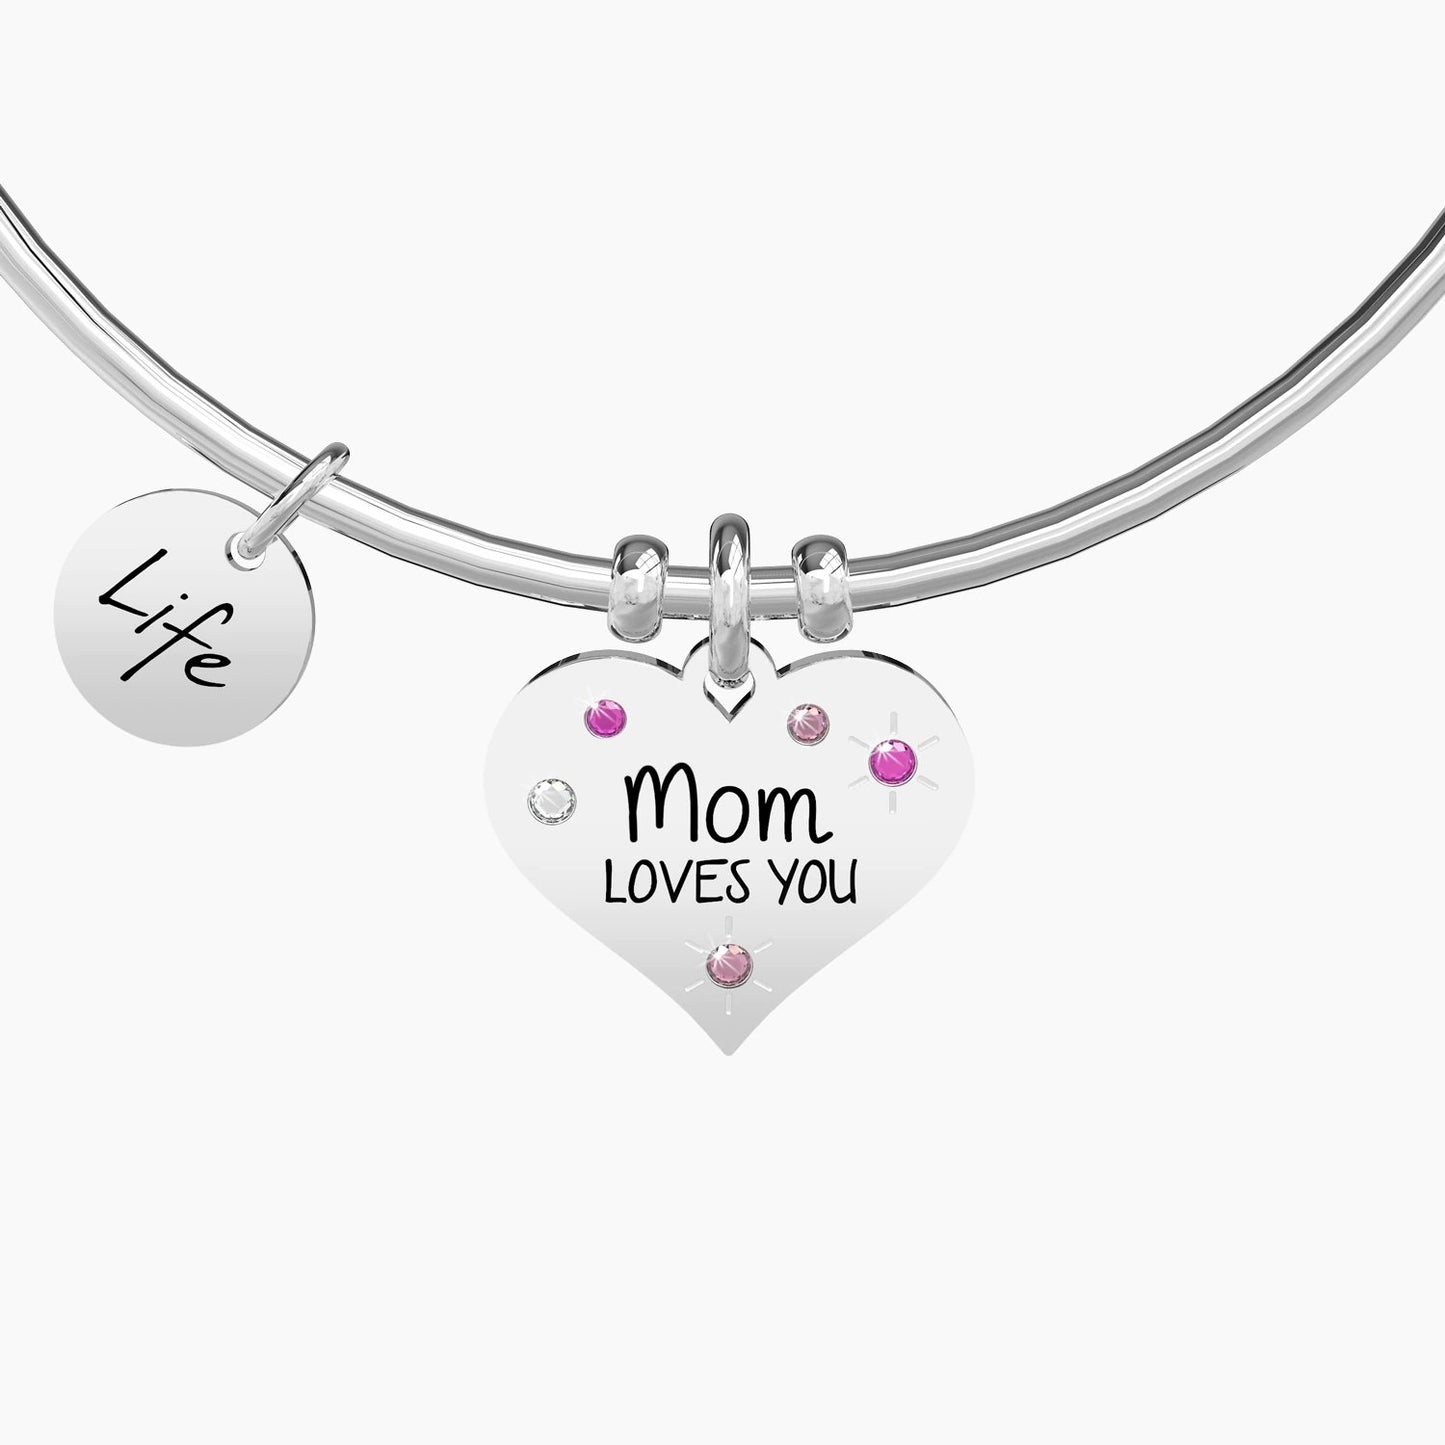 MOM LOVES YOU - 731902 - Simmi Gioiellerie -Bracciale